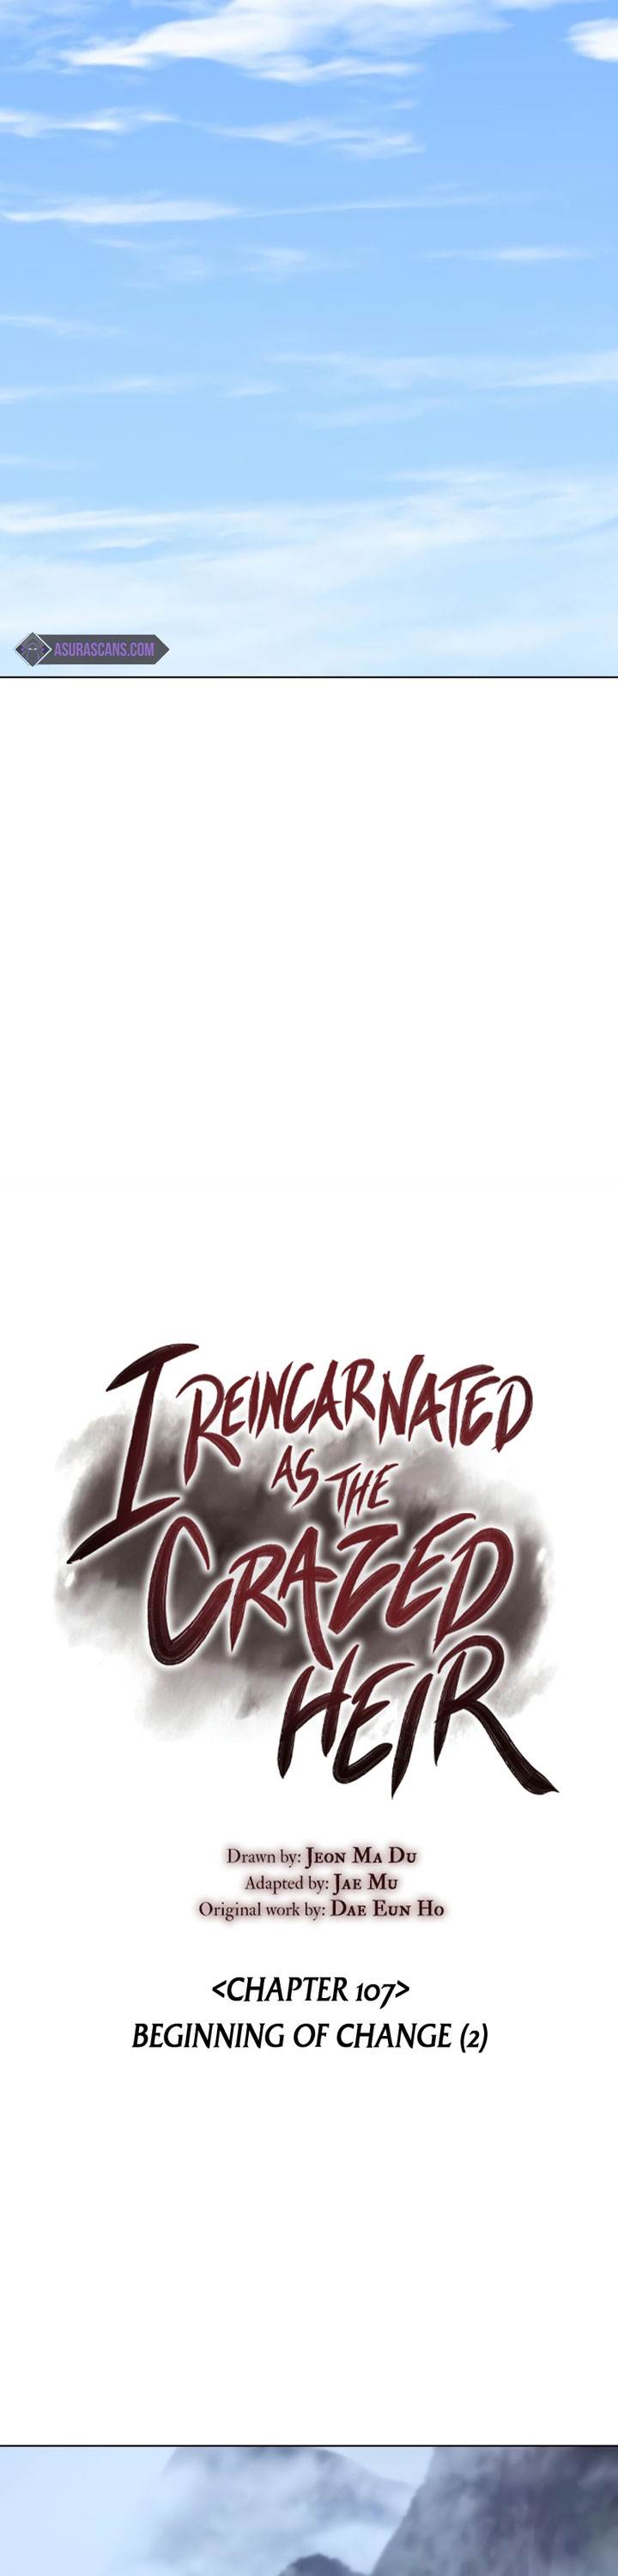 I Reincarnated As The Crazed Heir Chapter 107